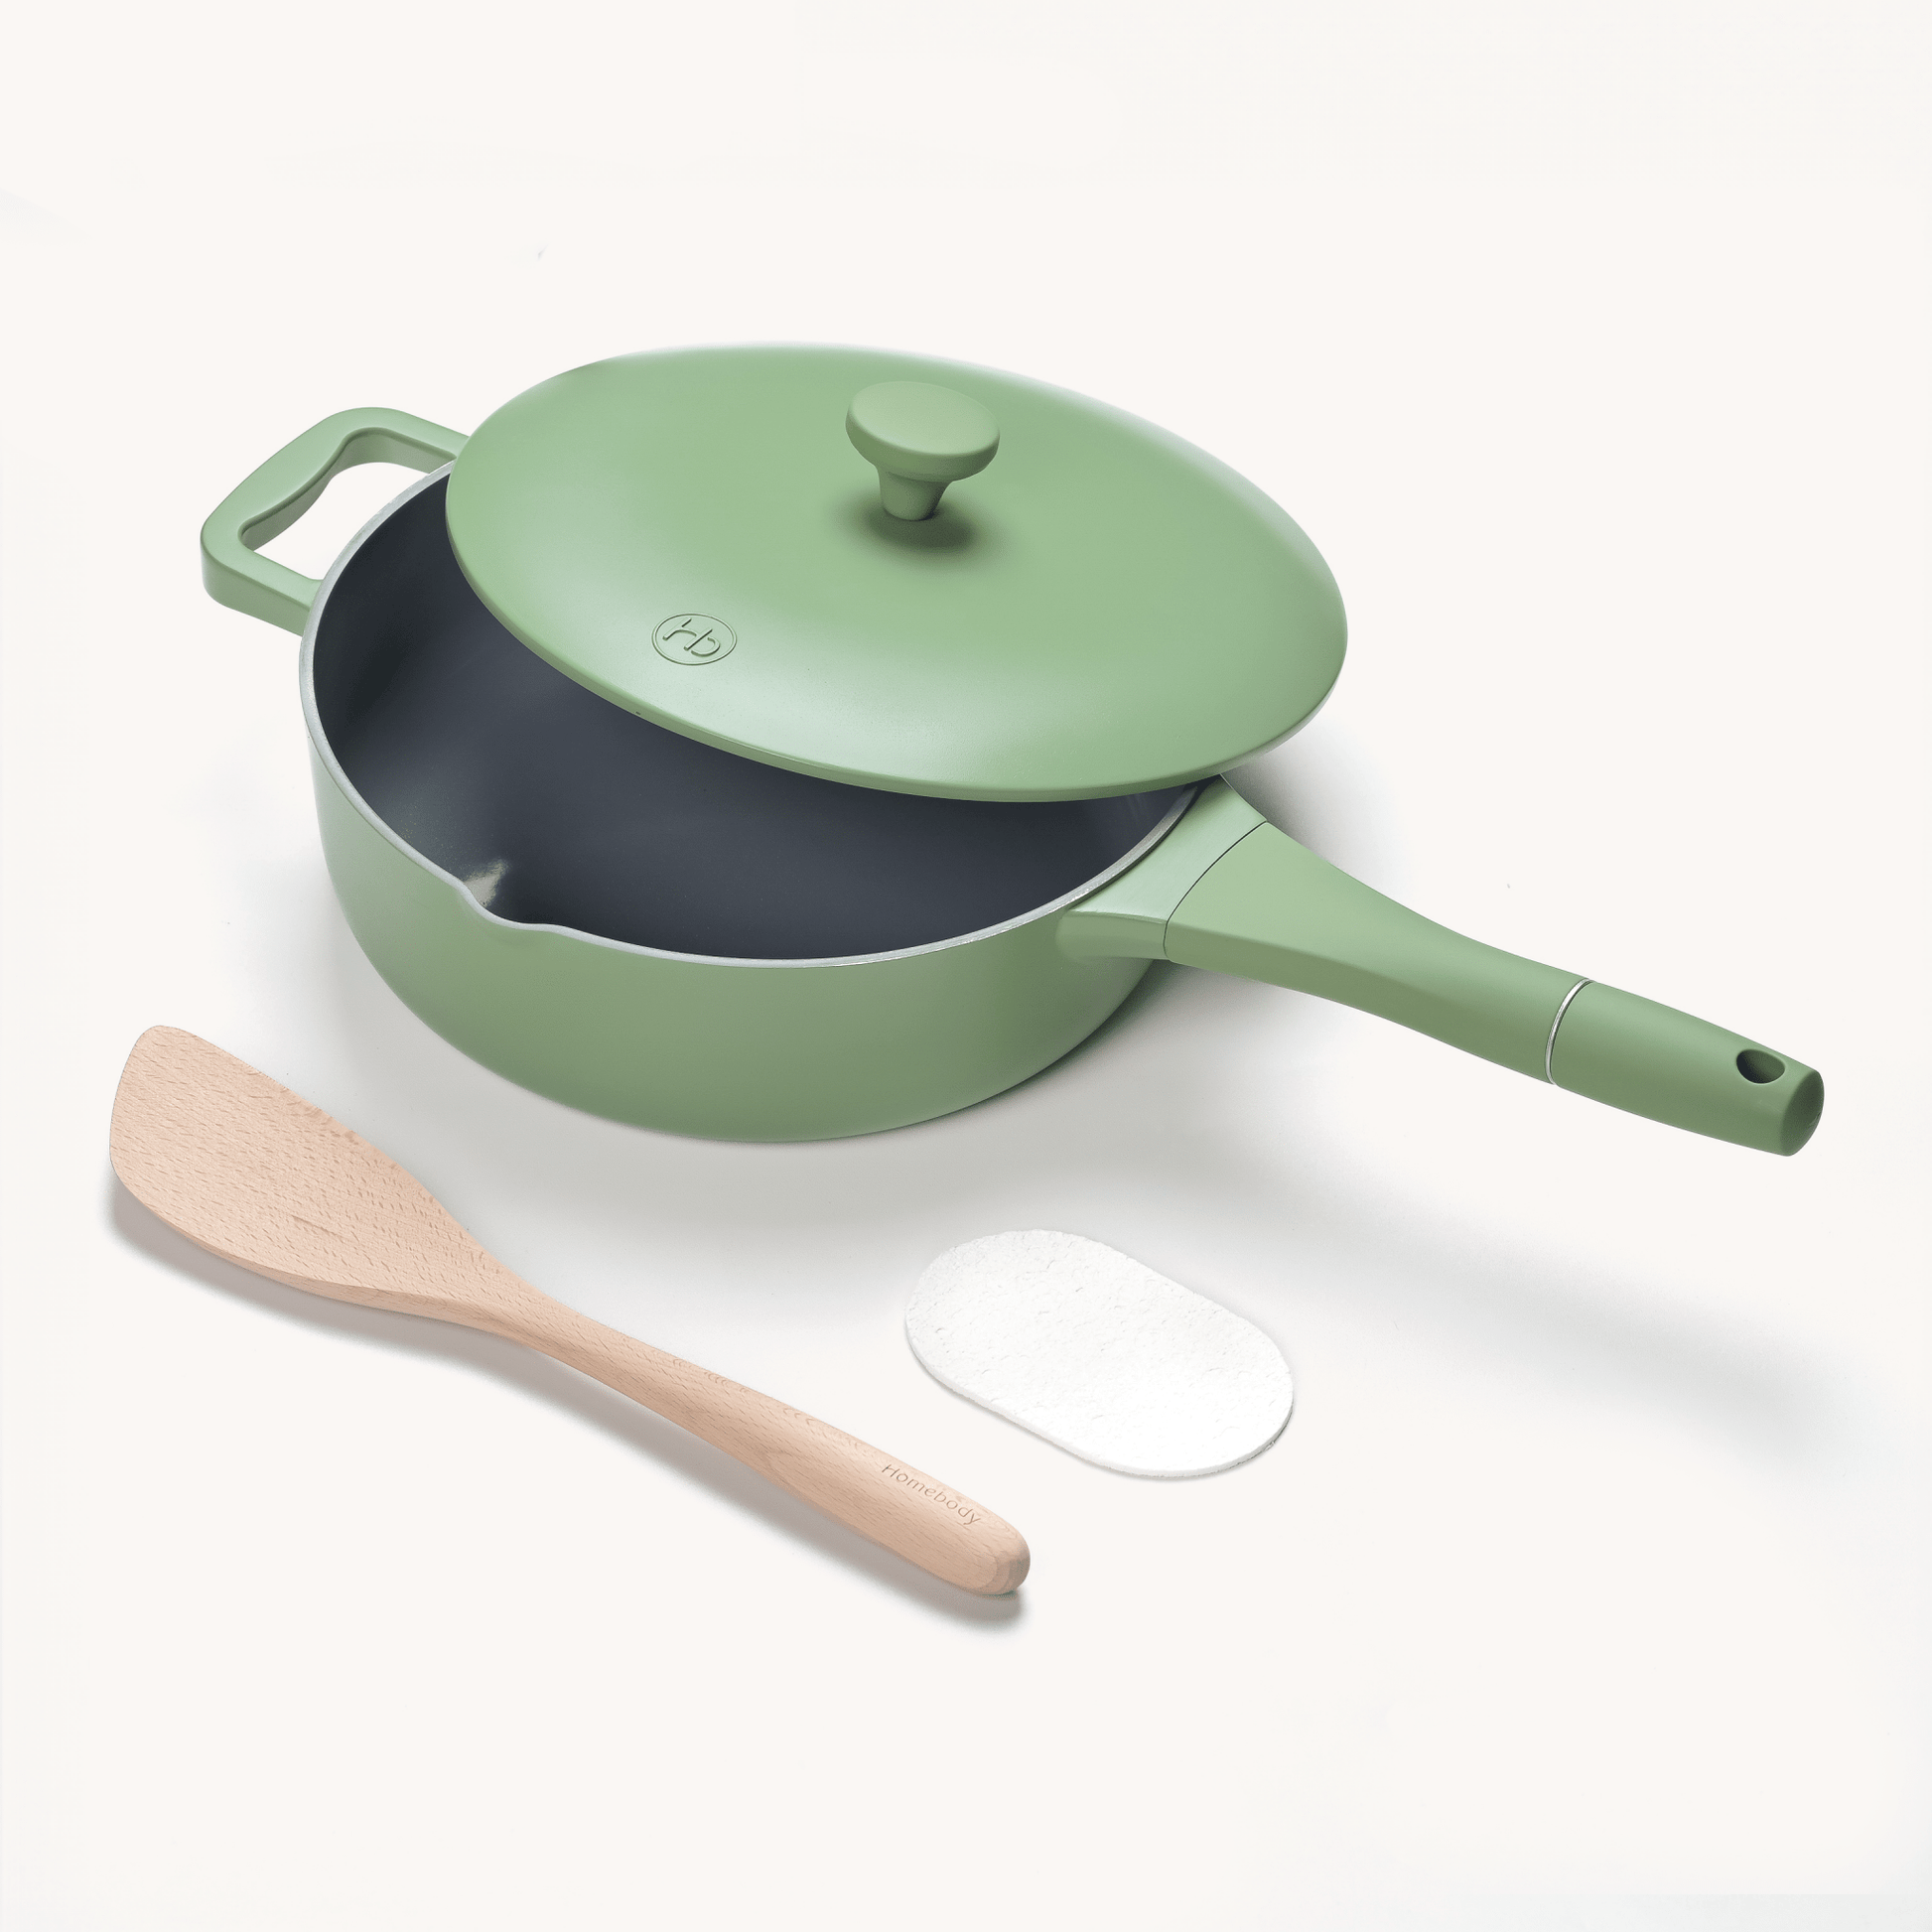 Super Pan - Homebody | Ceramic Non-stick cookware | No PFOA, PTFE